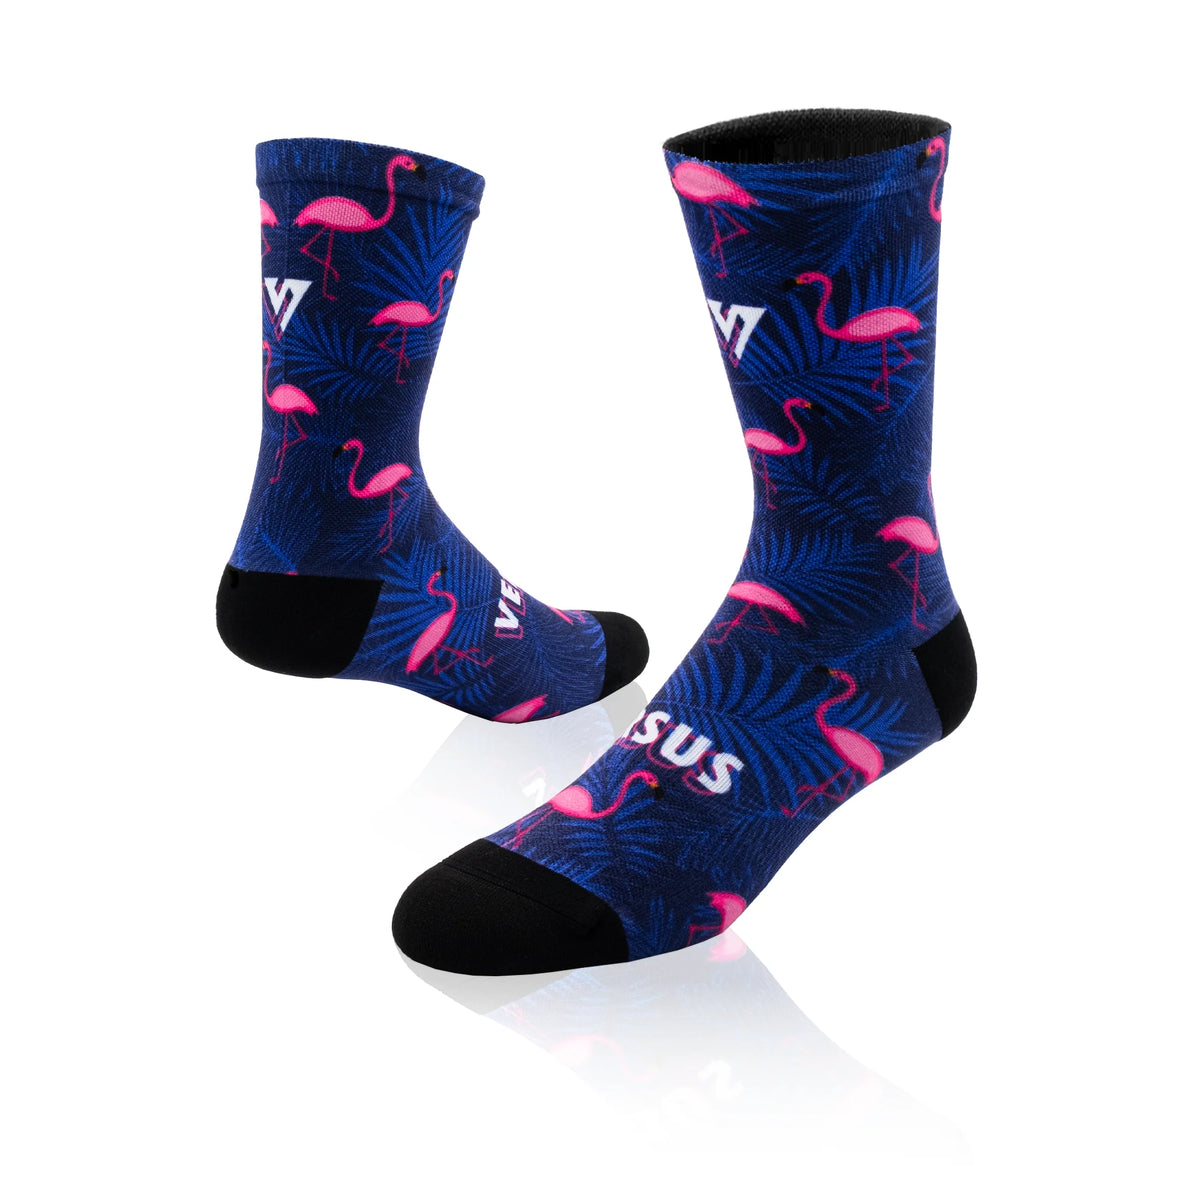 Versus Flamingo Elite Socks